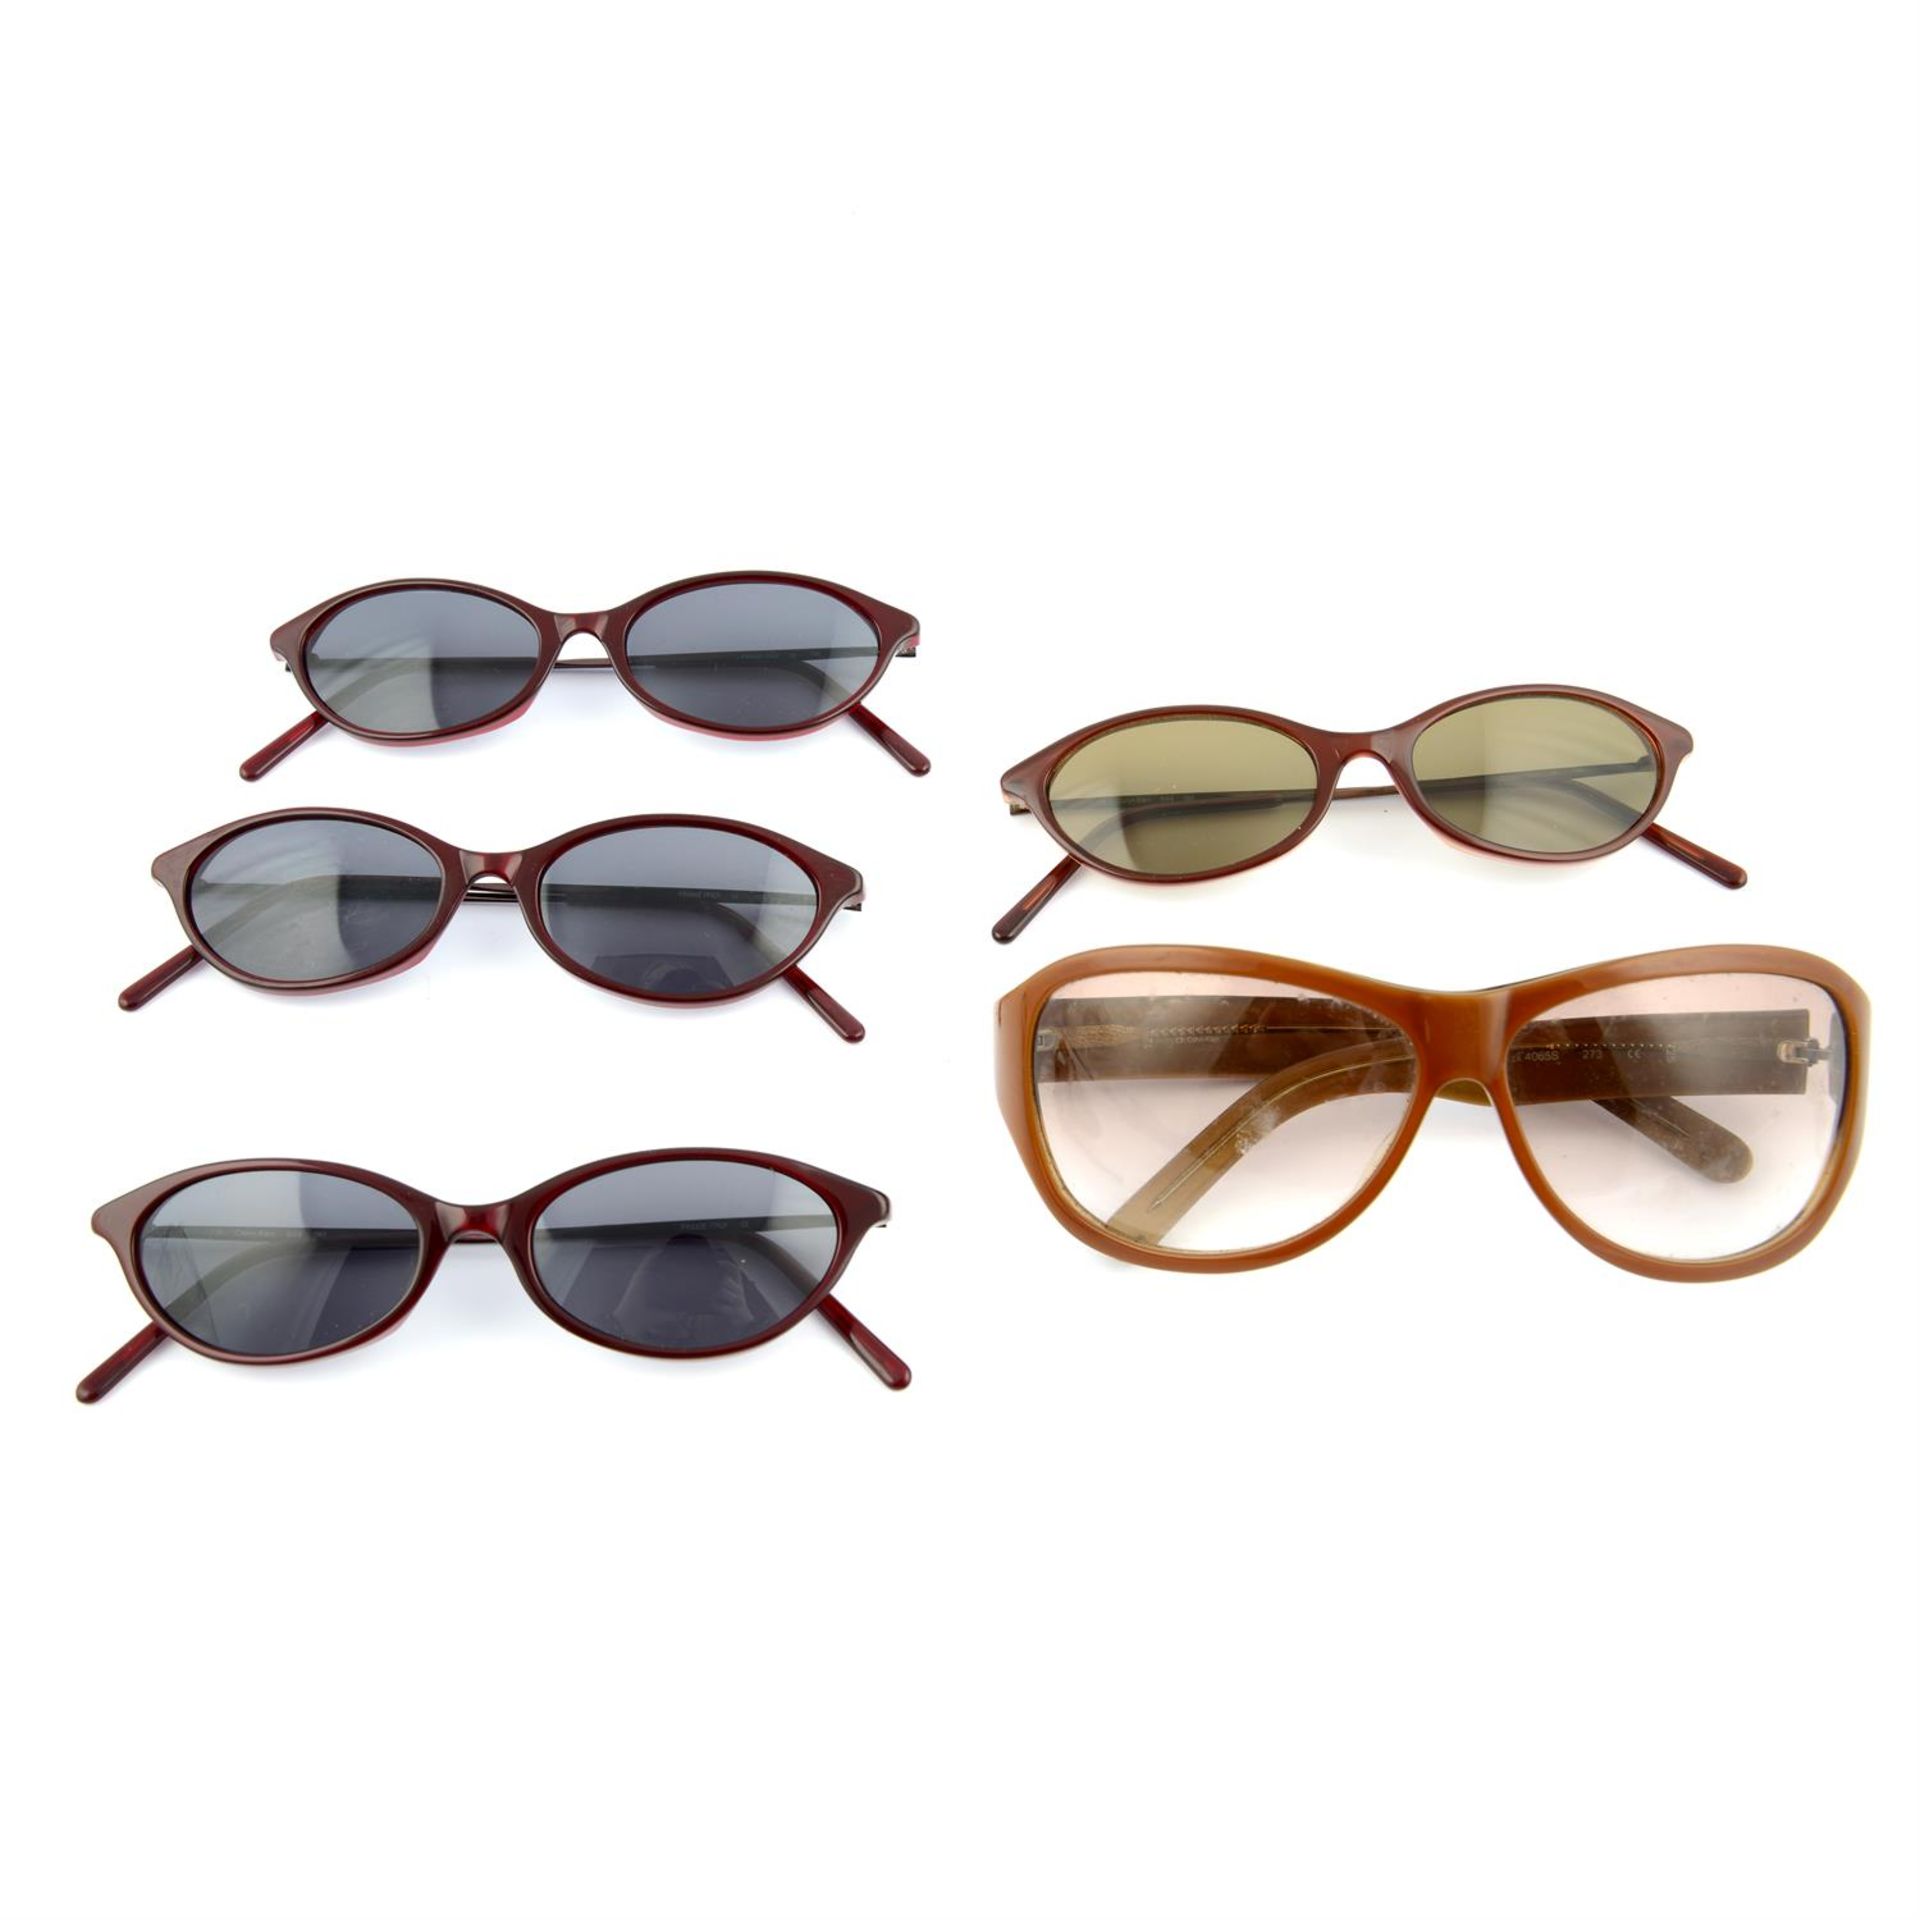 CALVIN KLEIN - five pairs of sunglasses.